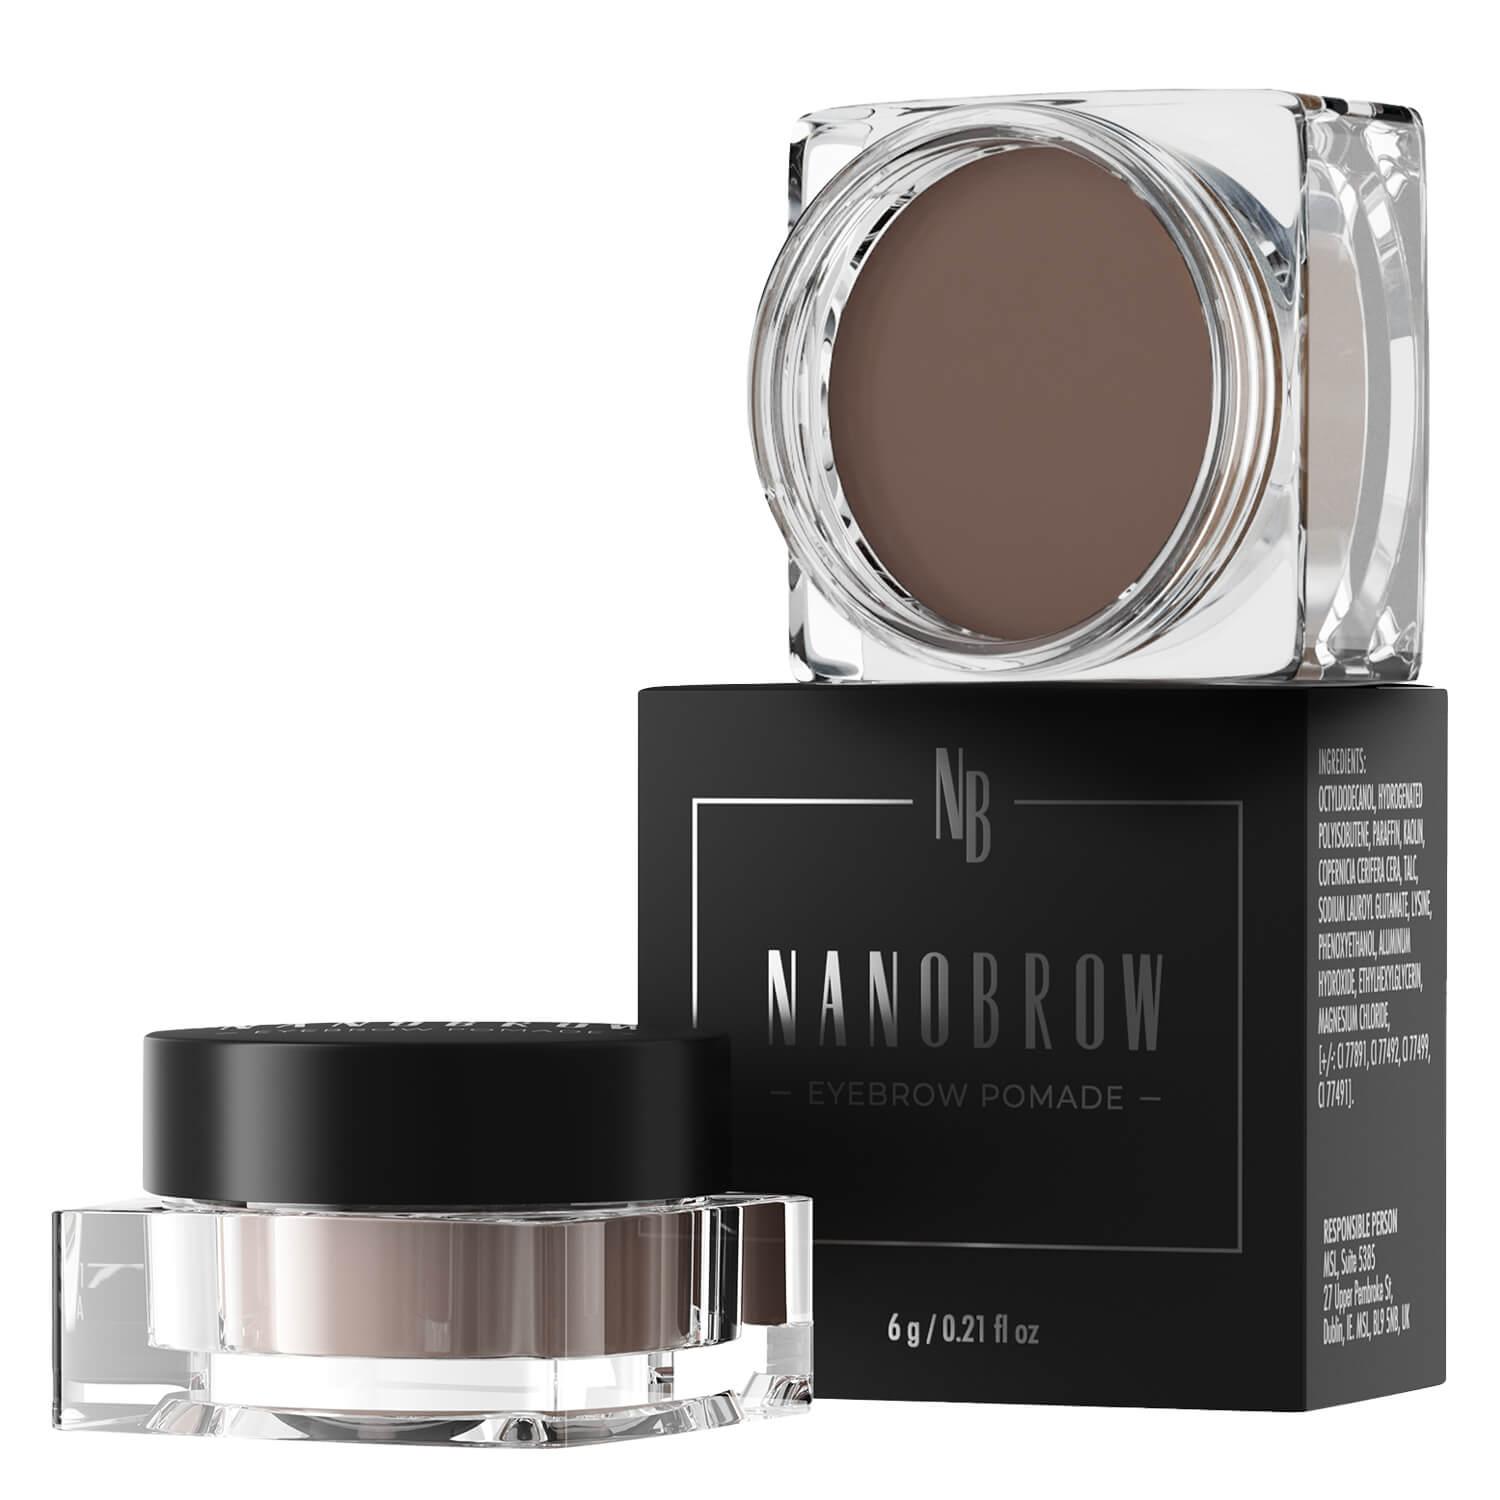 Nanobrow - Eyebrow Pomade Dark Brown